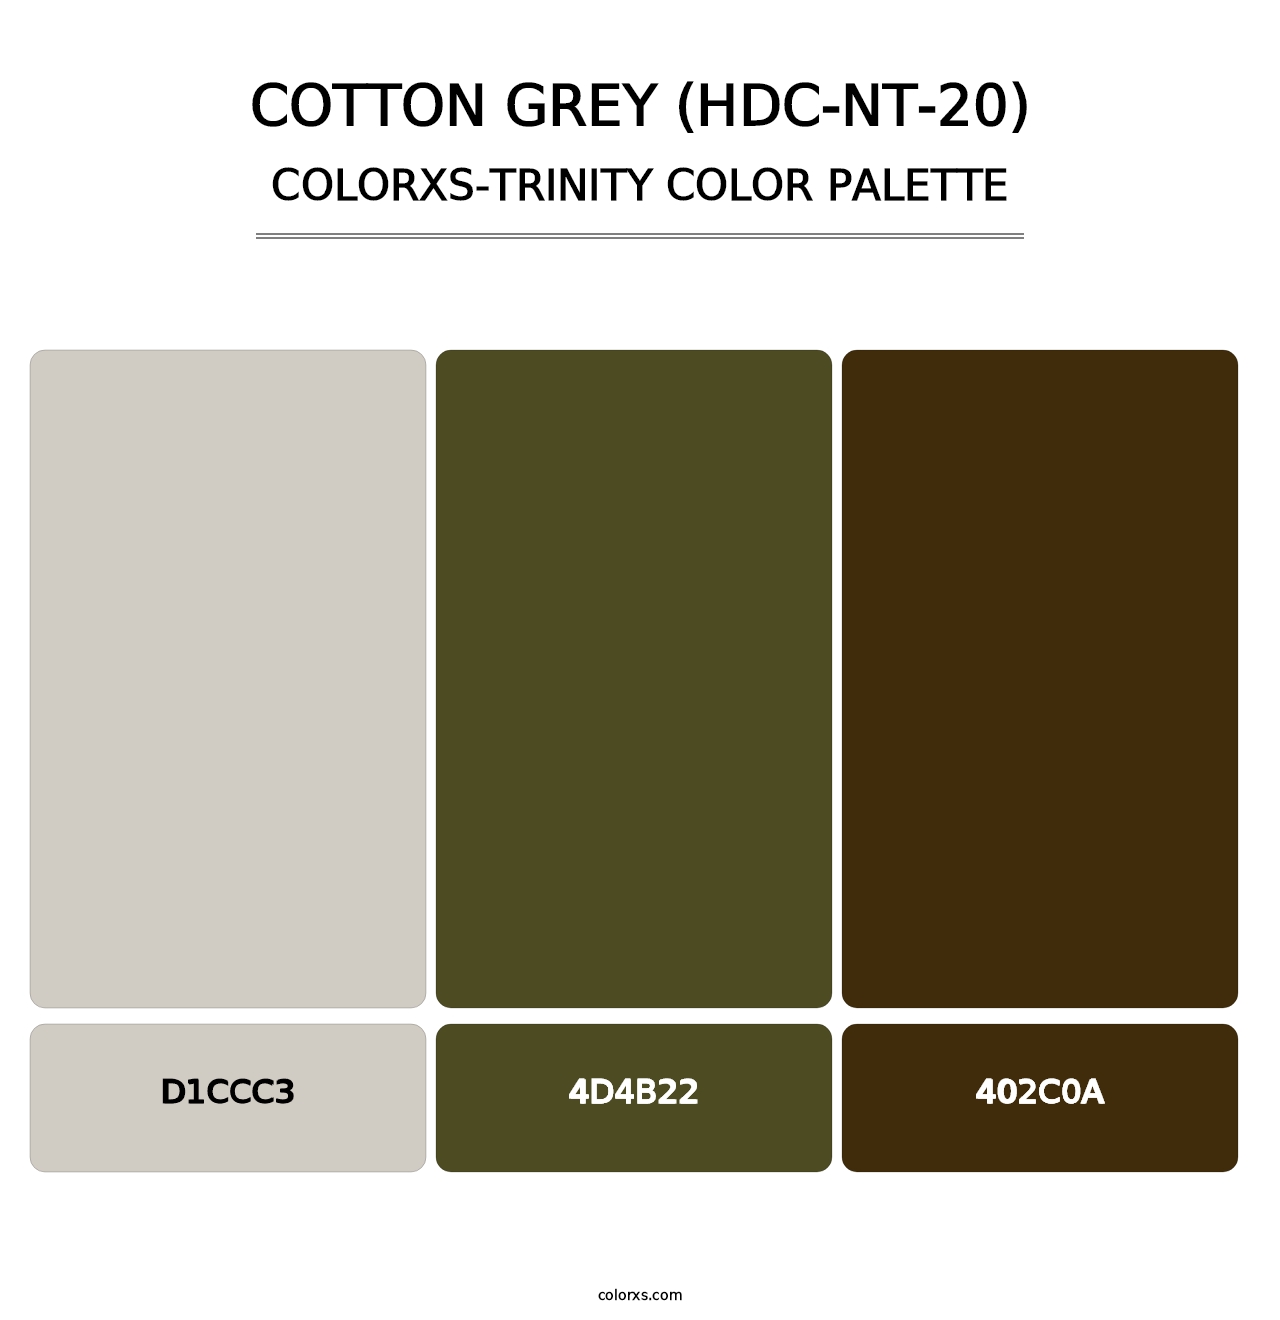 Cotton Grey (HDC-NT-20) - Colorxs Trinity Palette